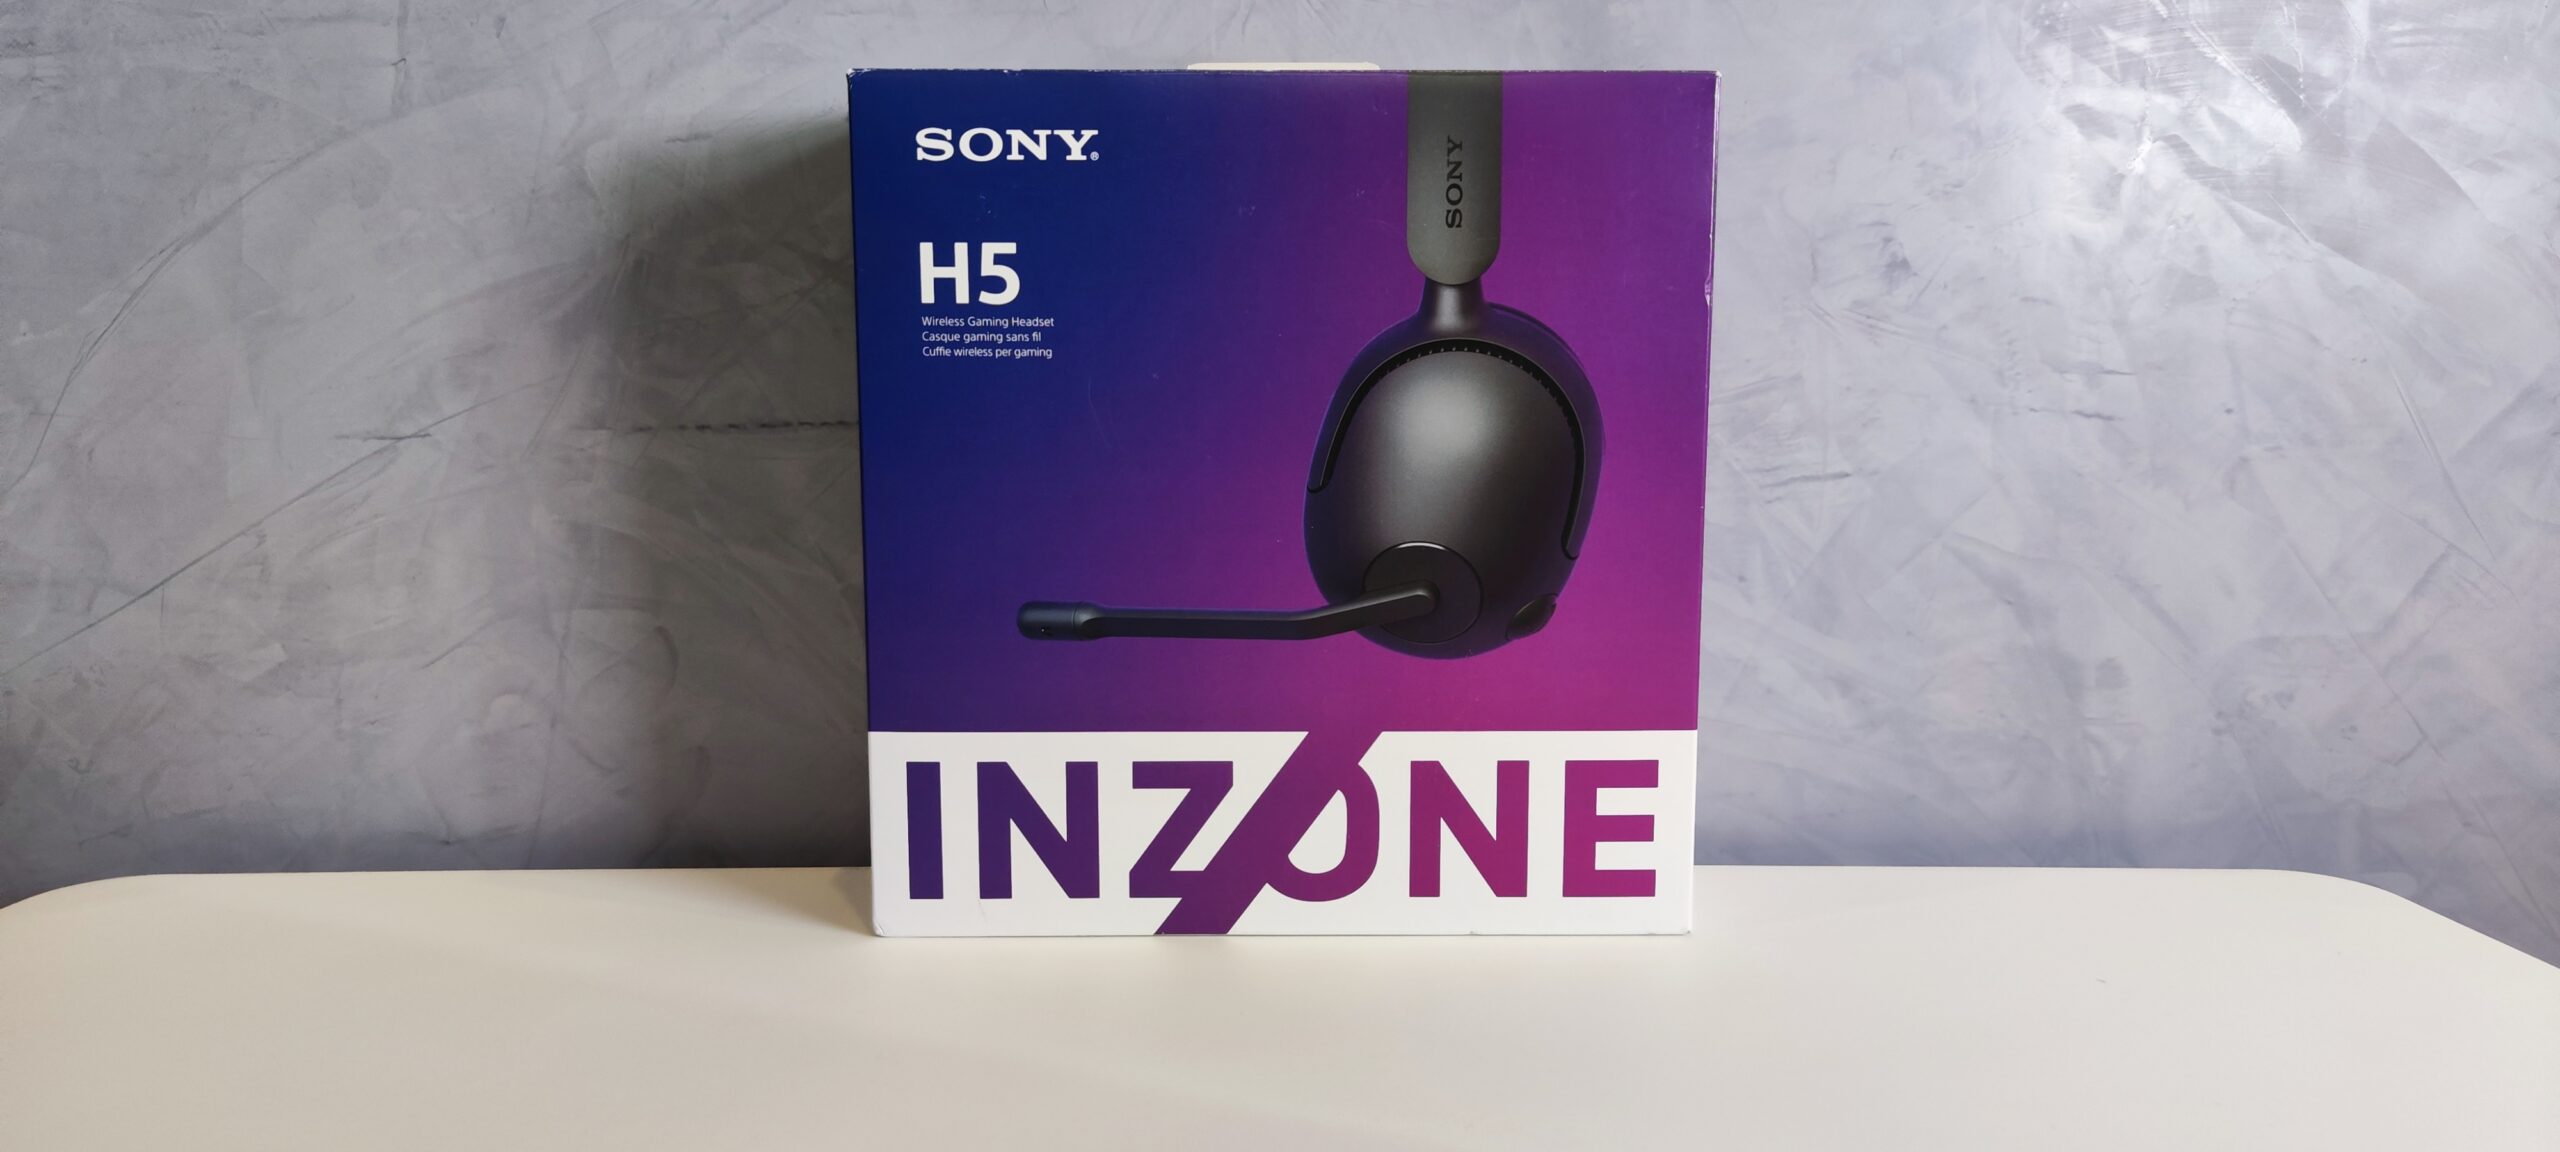 Sony Inzone H5 2 scaled